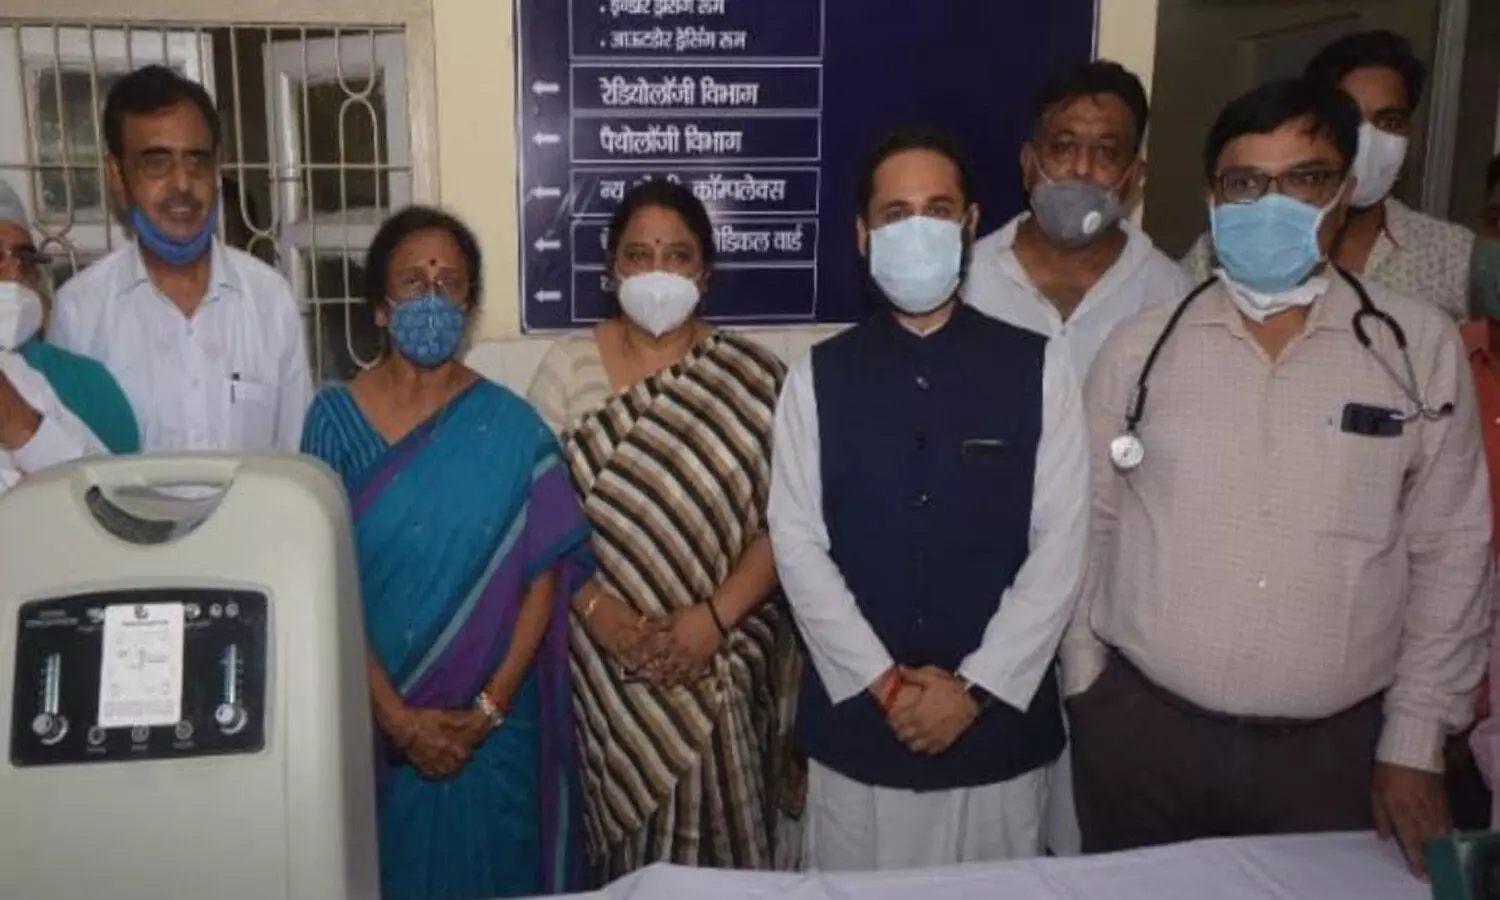 Mayank joshi donated 10 Oxygen Concentrators